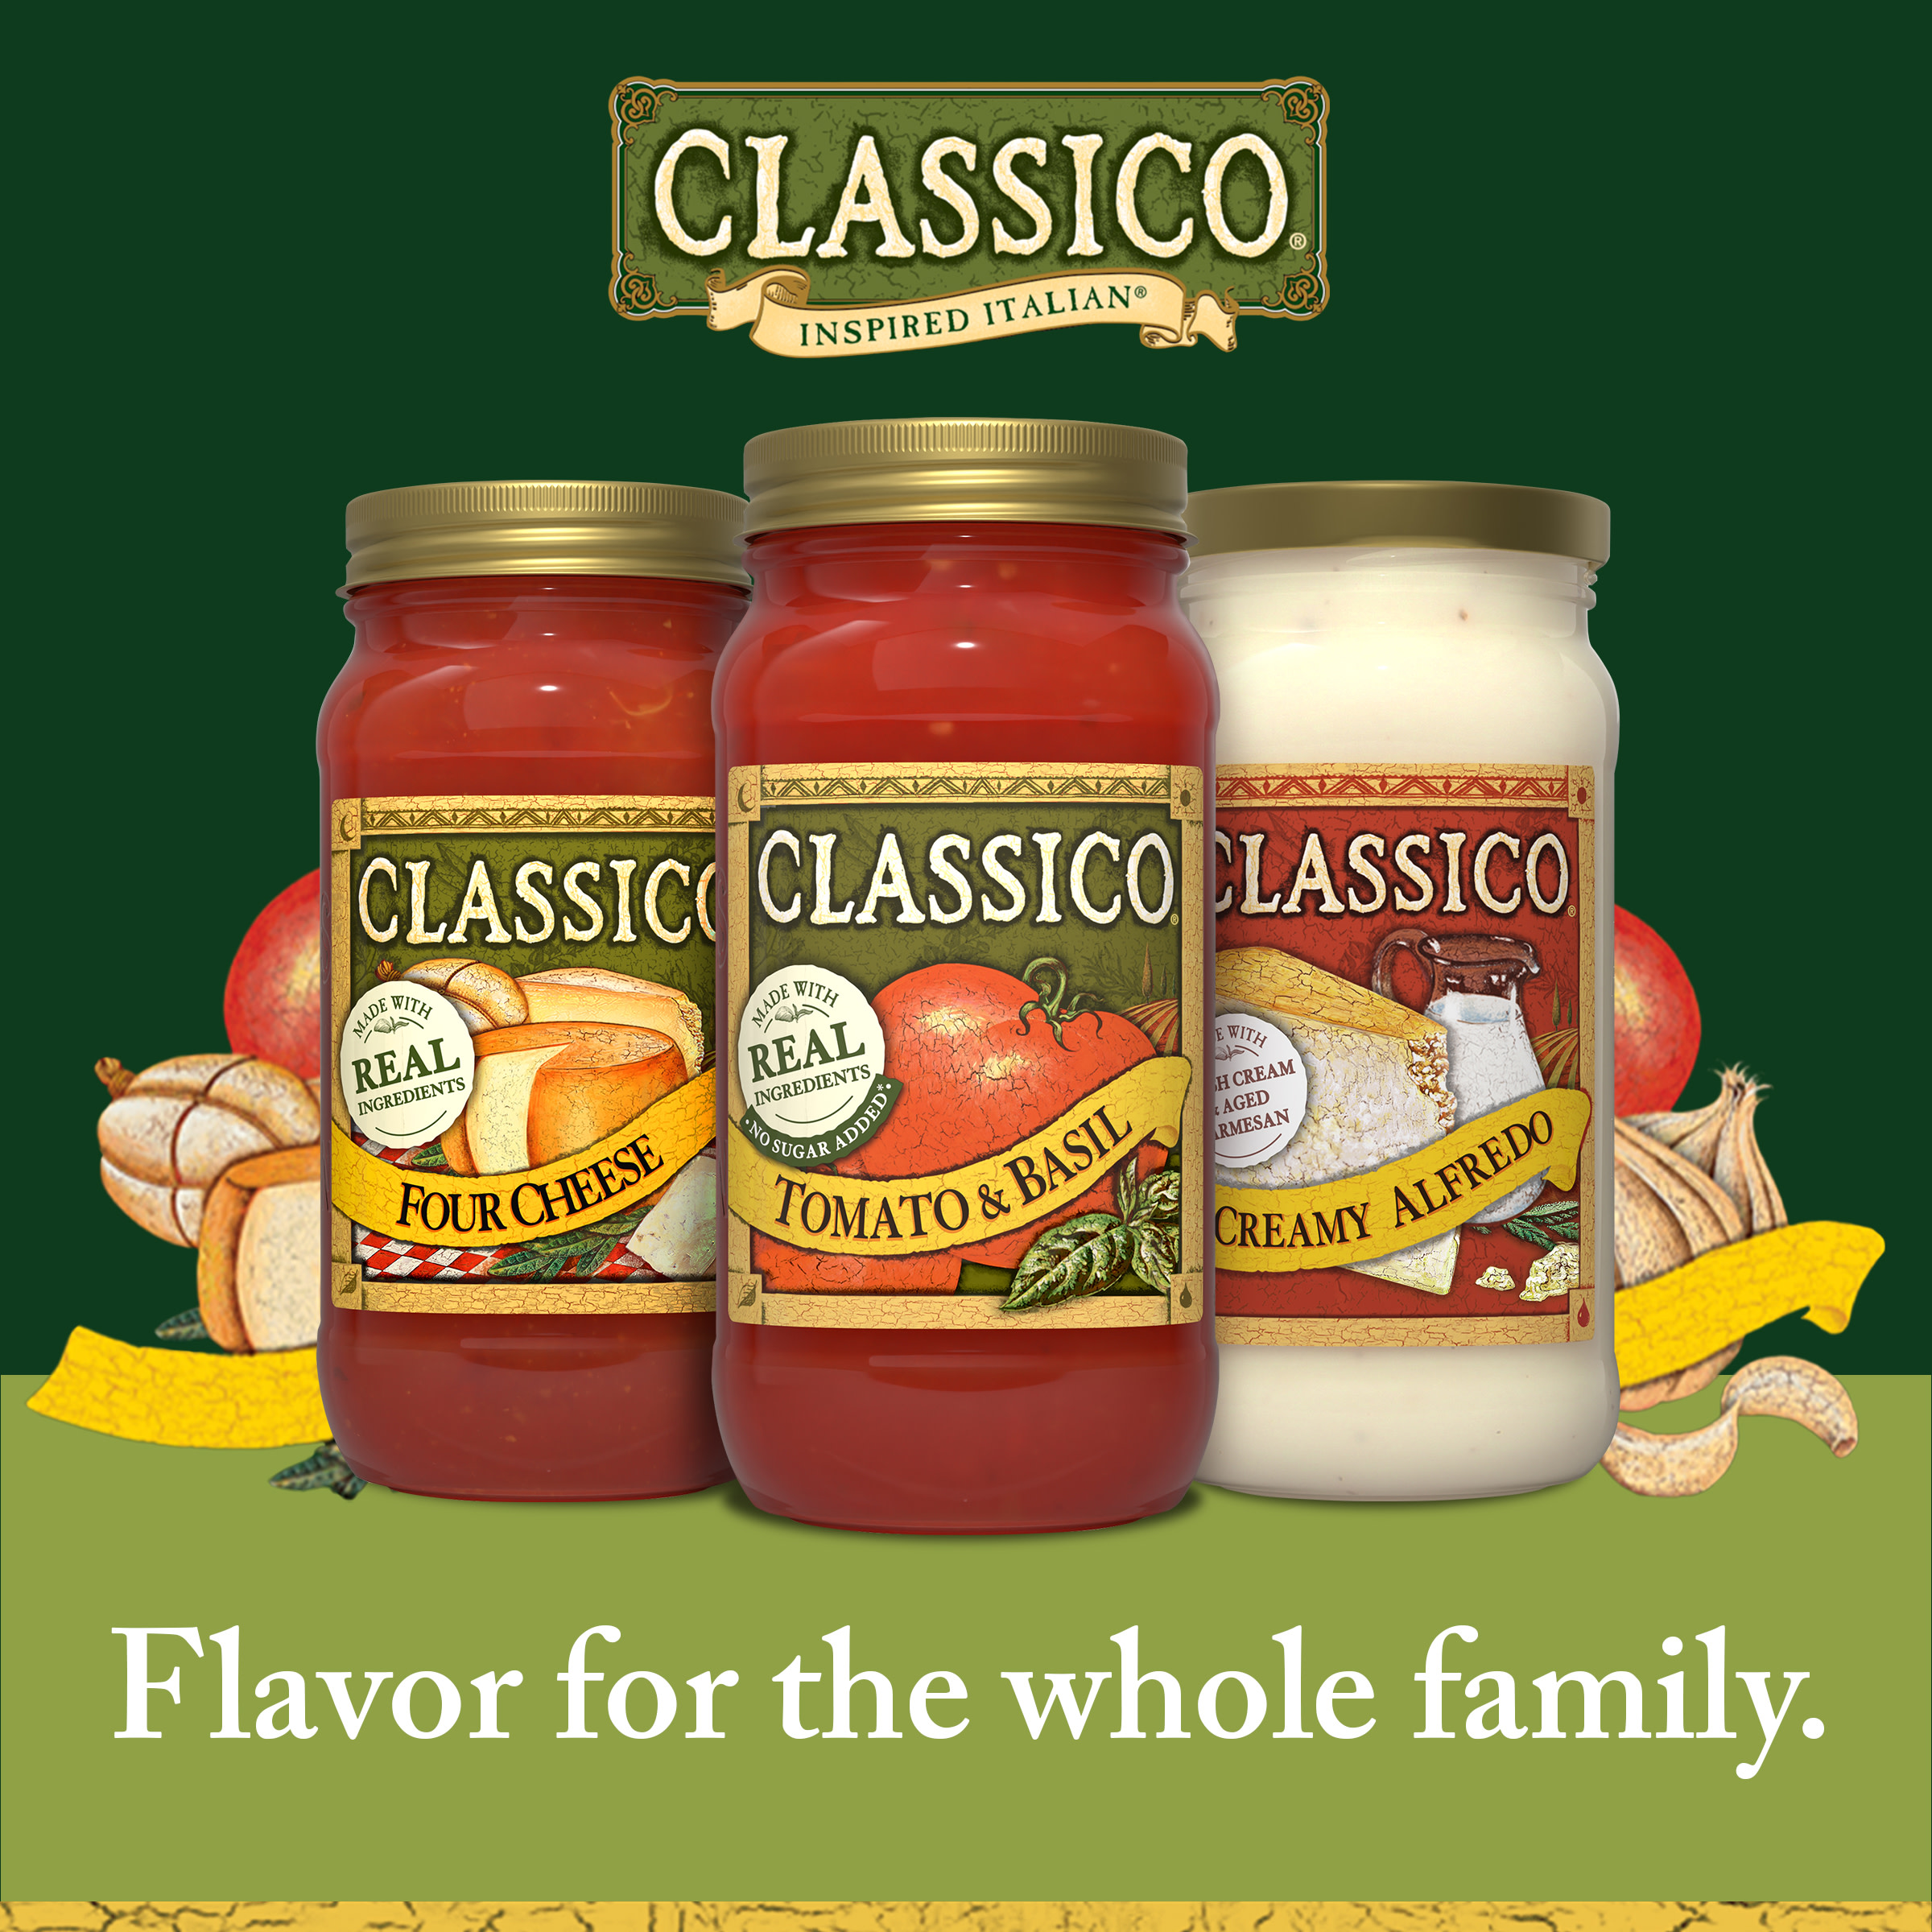 Classico Tomato & Basil Spaghetti Pasta Sauce, 24 oz. Jar - image 6 of 18